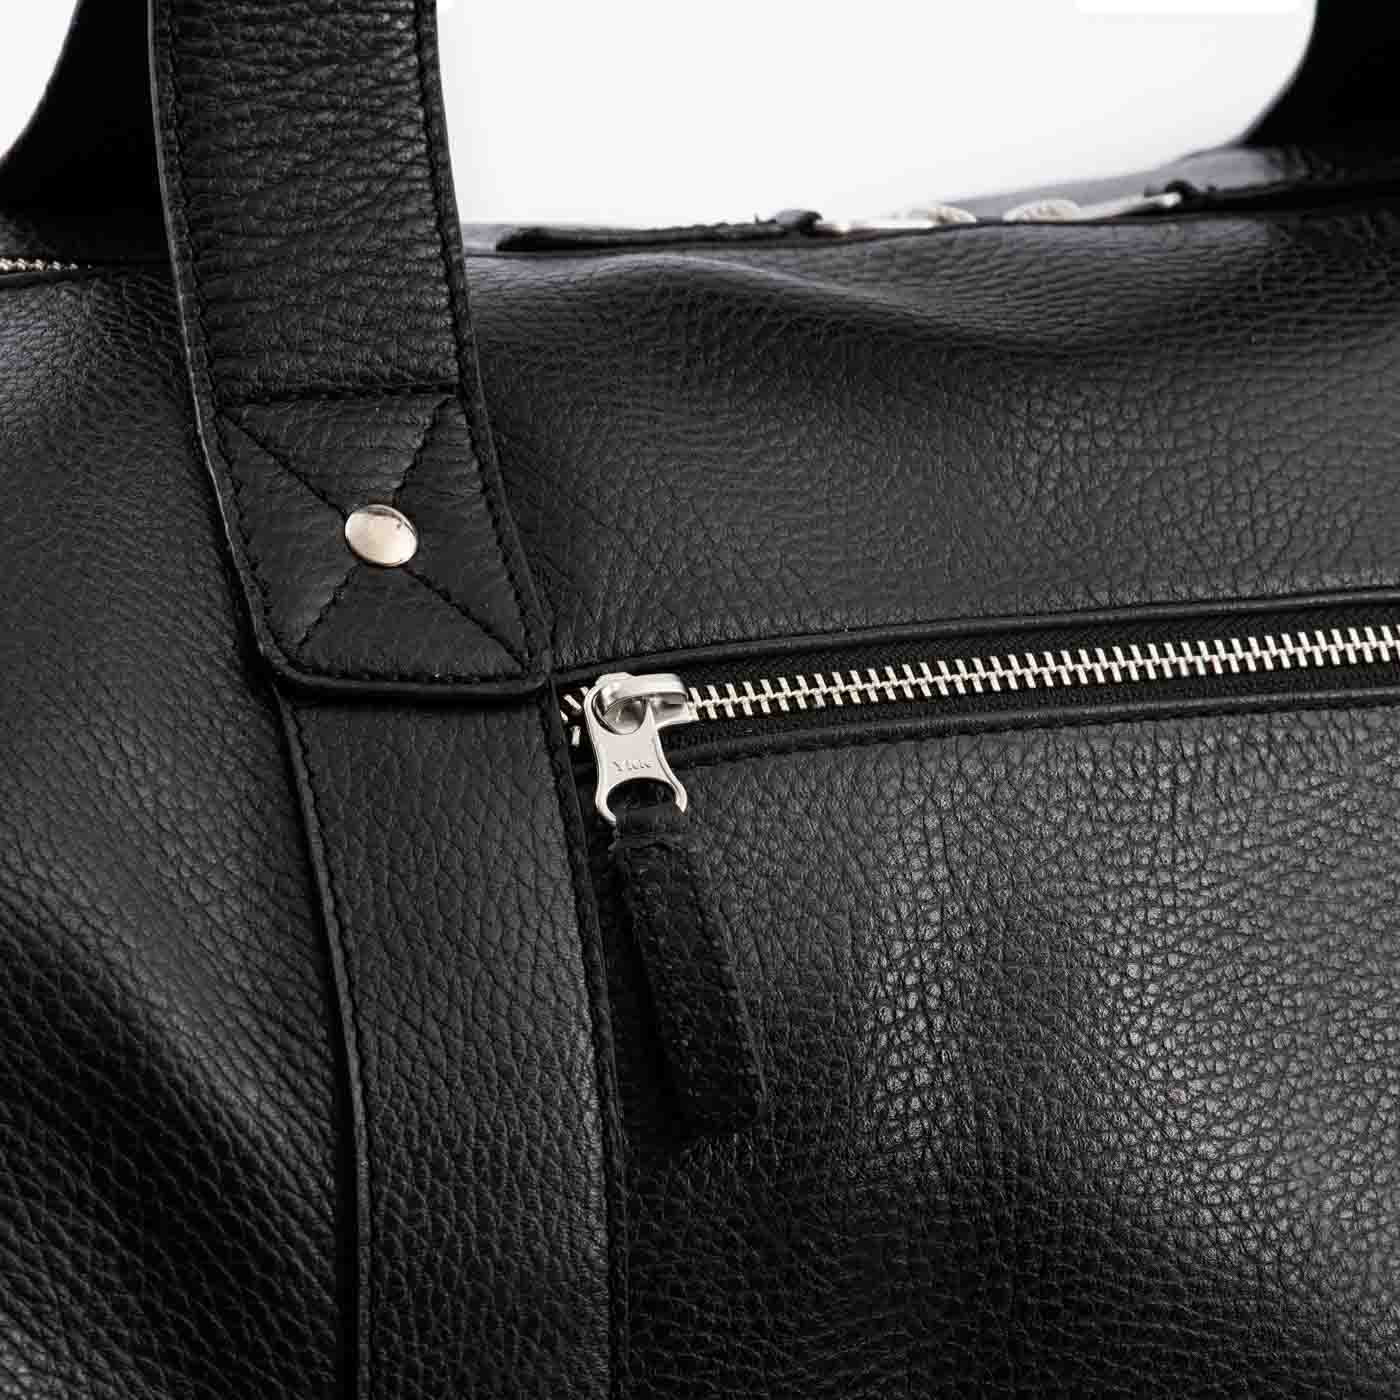 Allen Edmonds Leather Duffel Bag in Black Leather